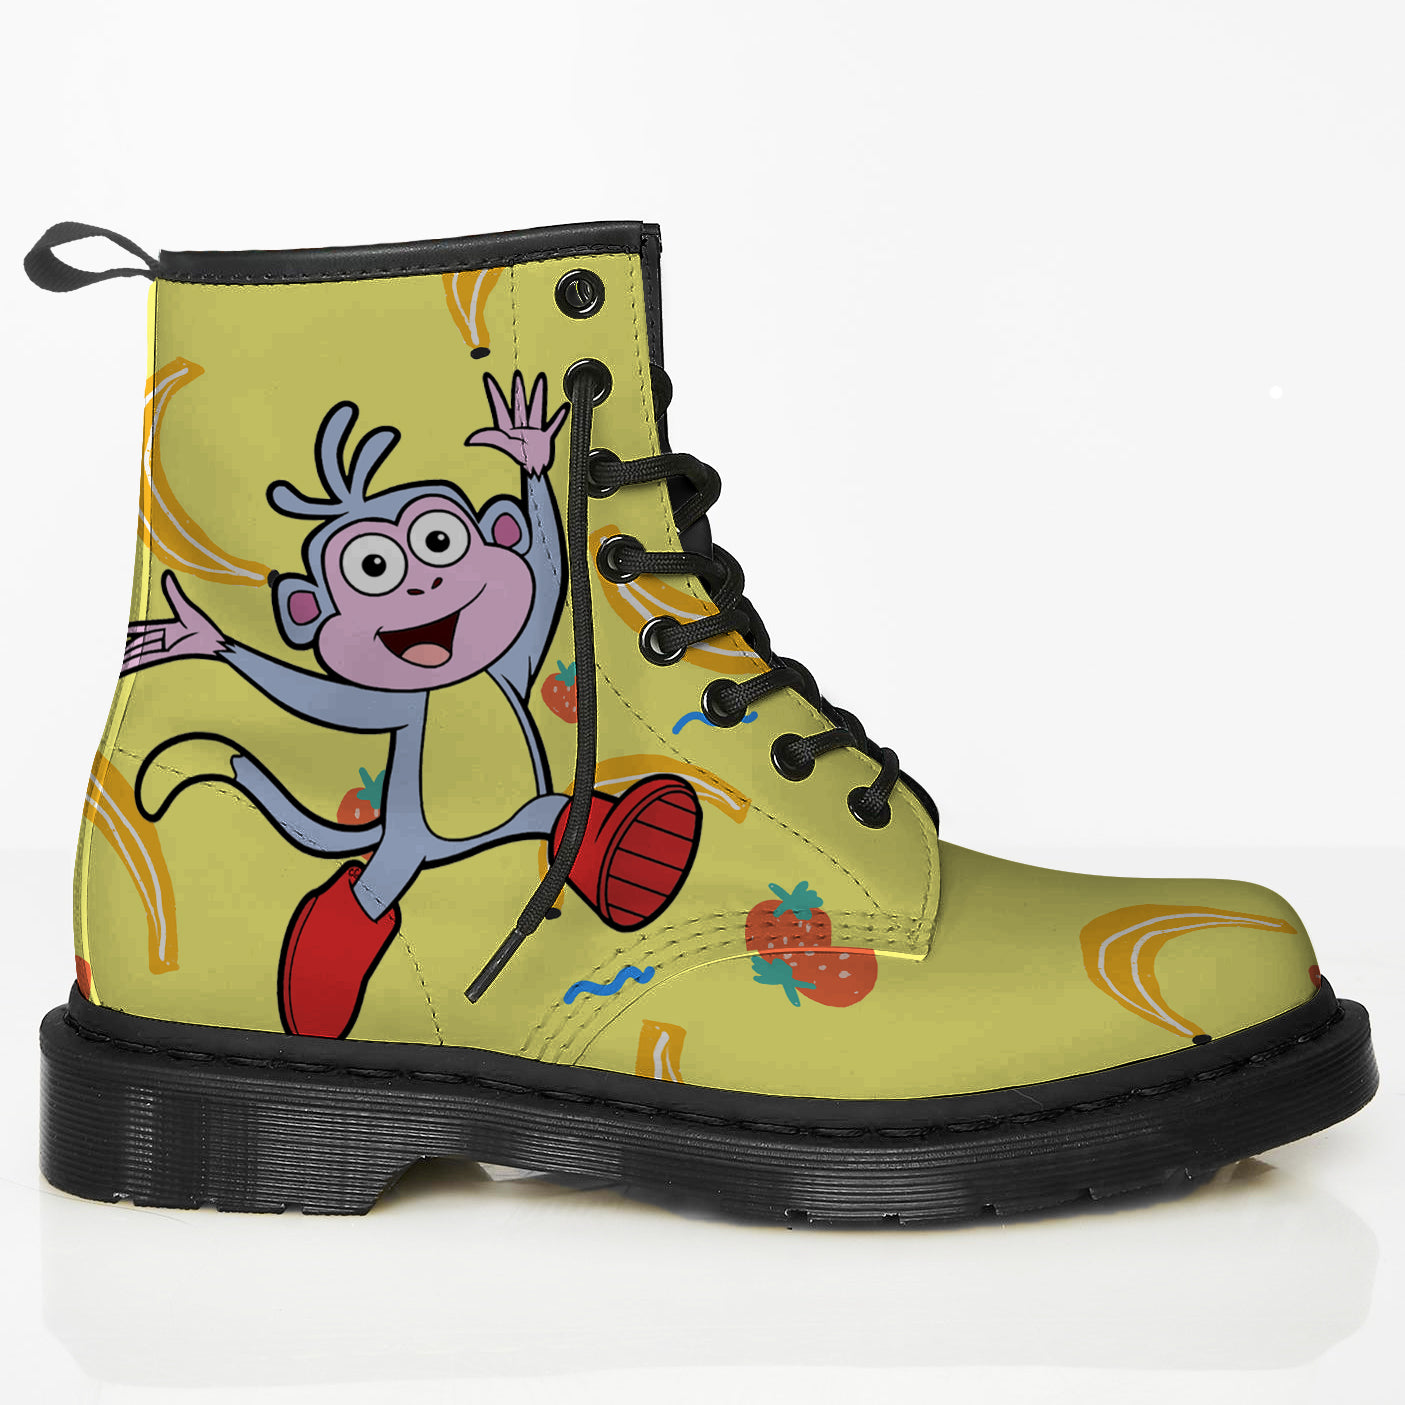 Dora the Explorer Boots the Monkey Boots